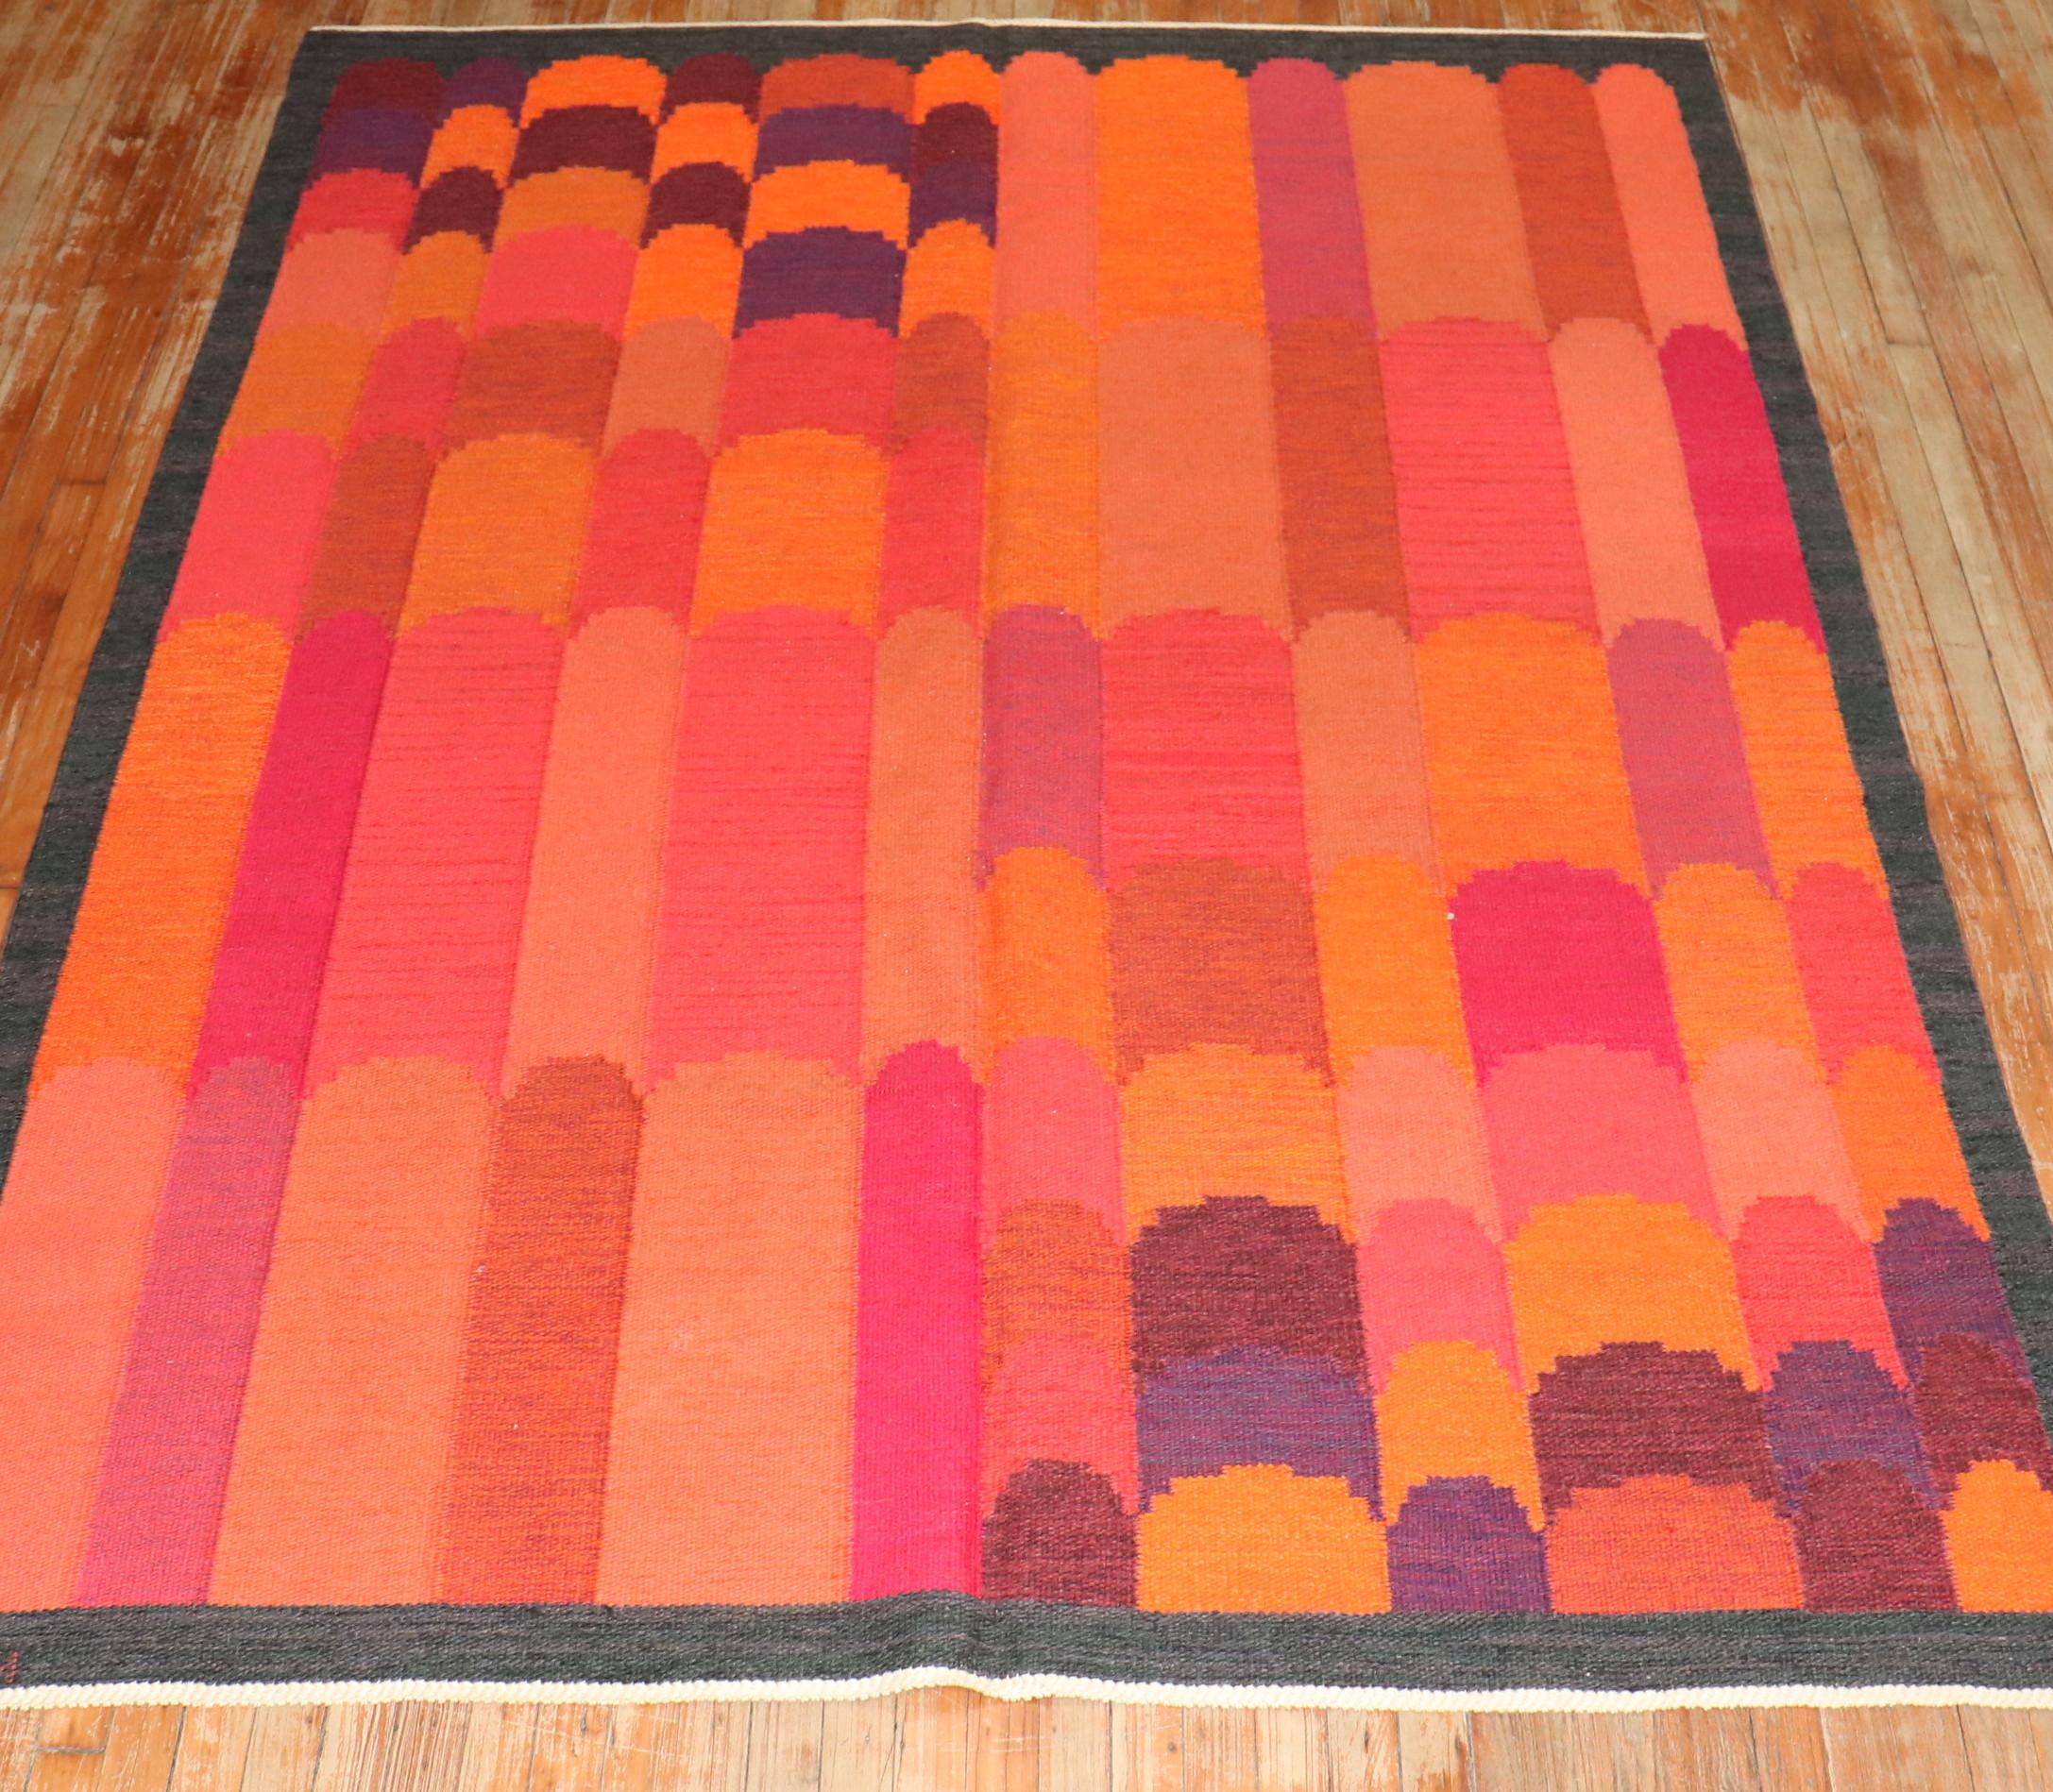 This dramatic vintage rollaken kilm  rug was woven in Kronoborgs Lans Hemslojd-Kristianstad by Irma Kronlund in 1955

Measures: 6'6'' x 8'7